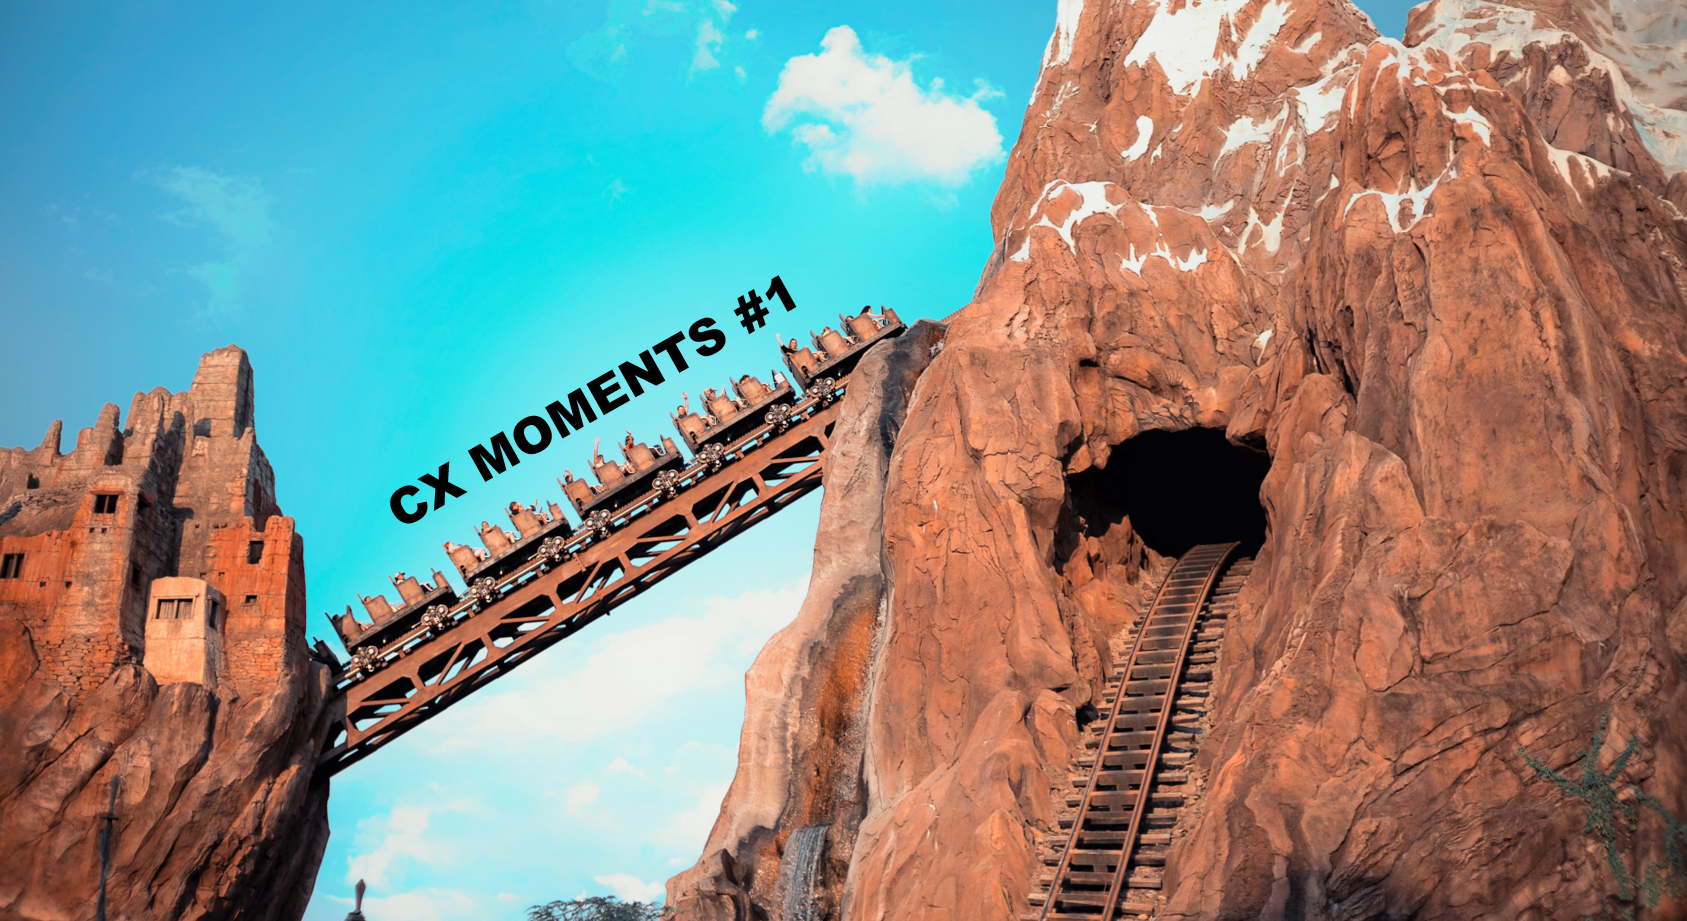 CX moments #1